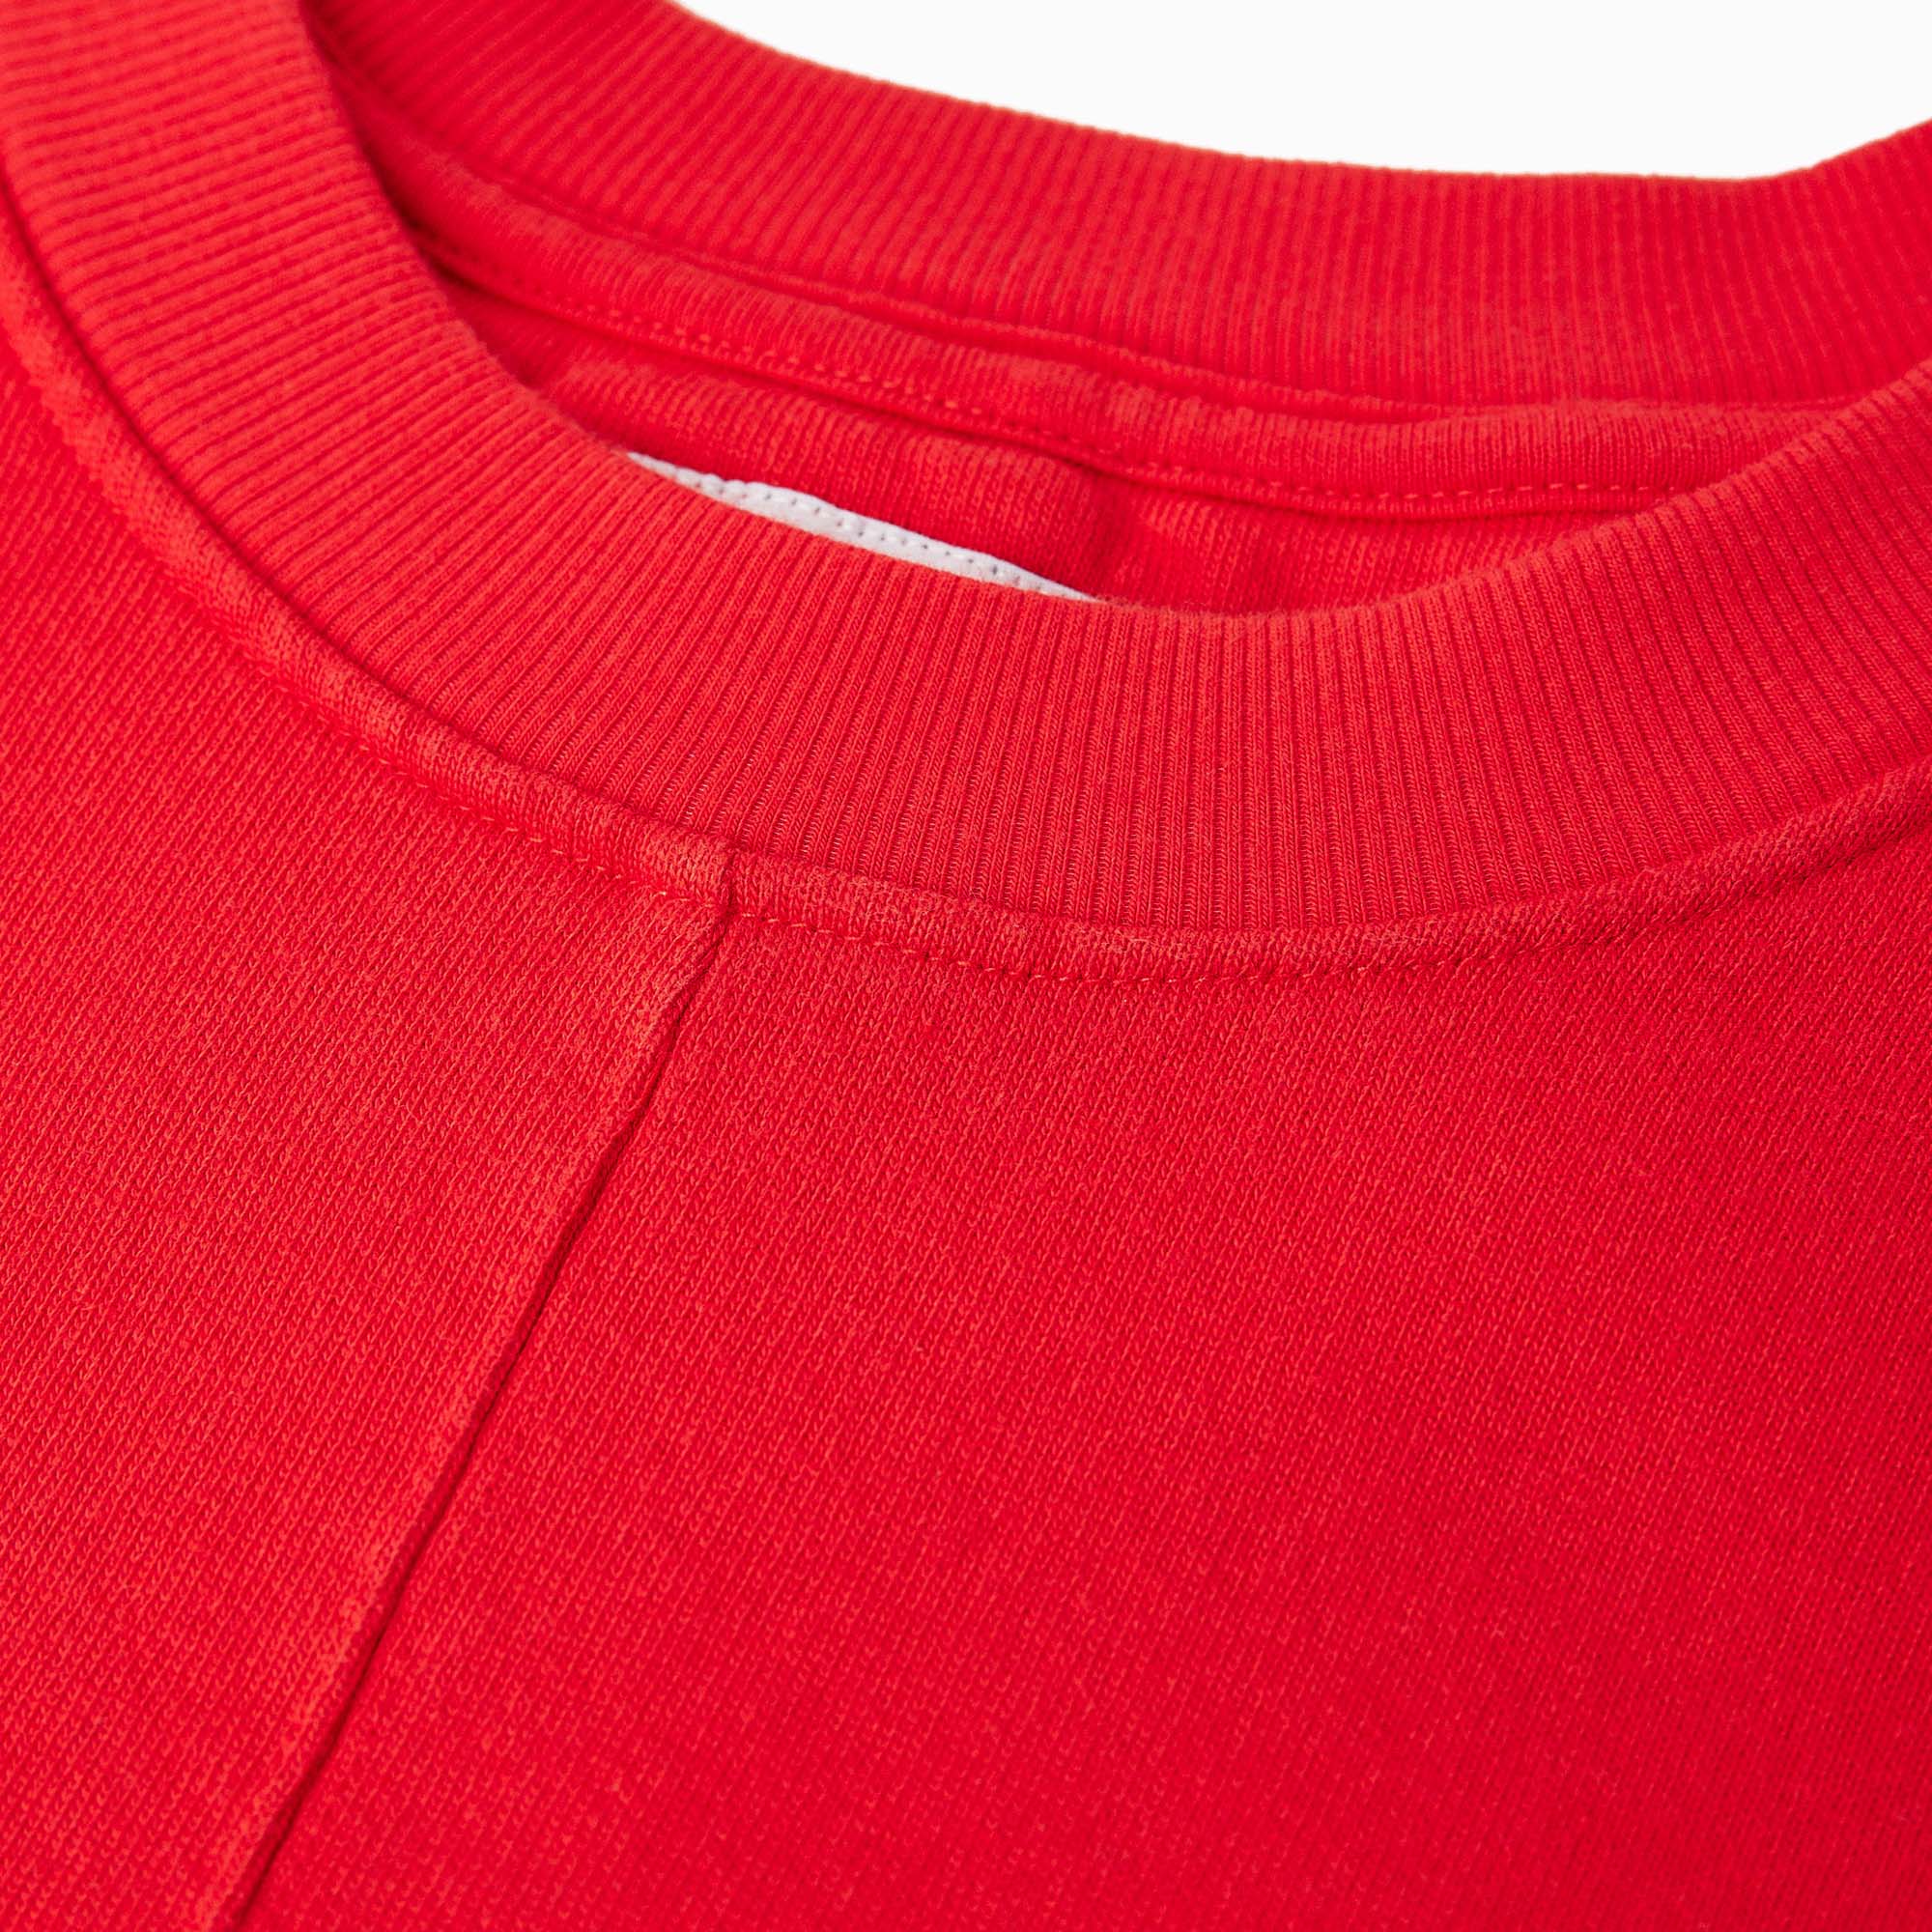 USA sweatshirt / red